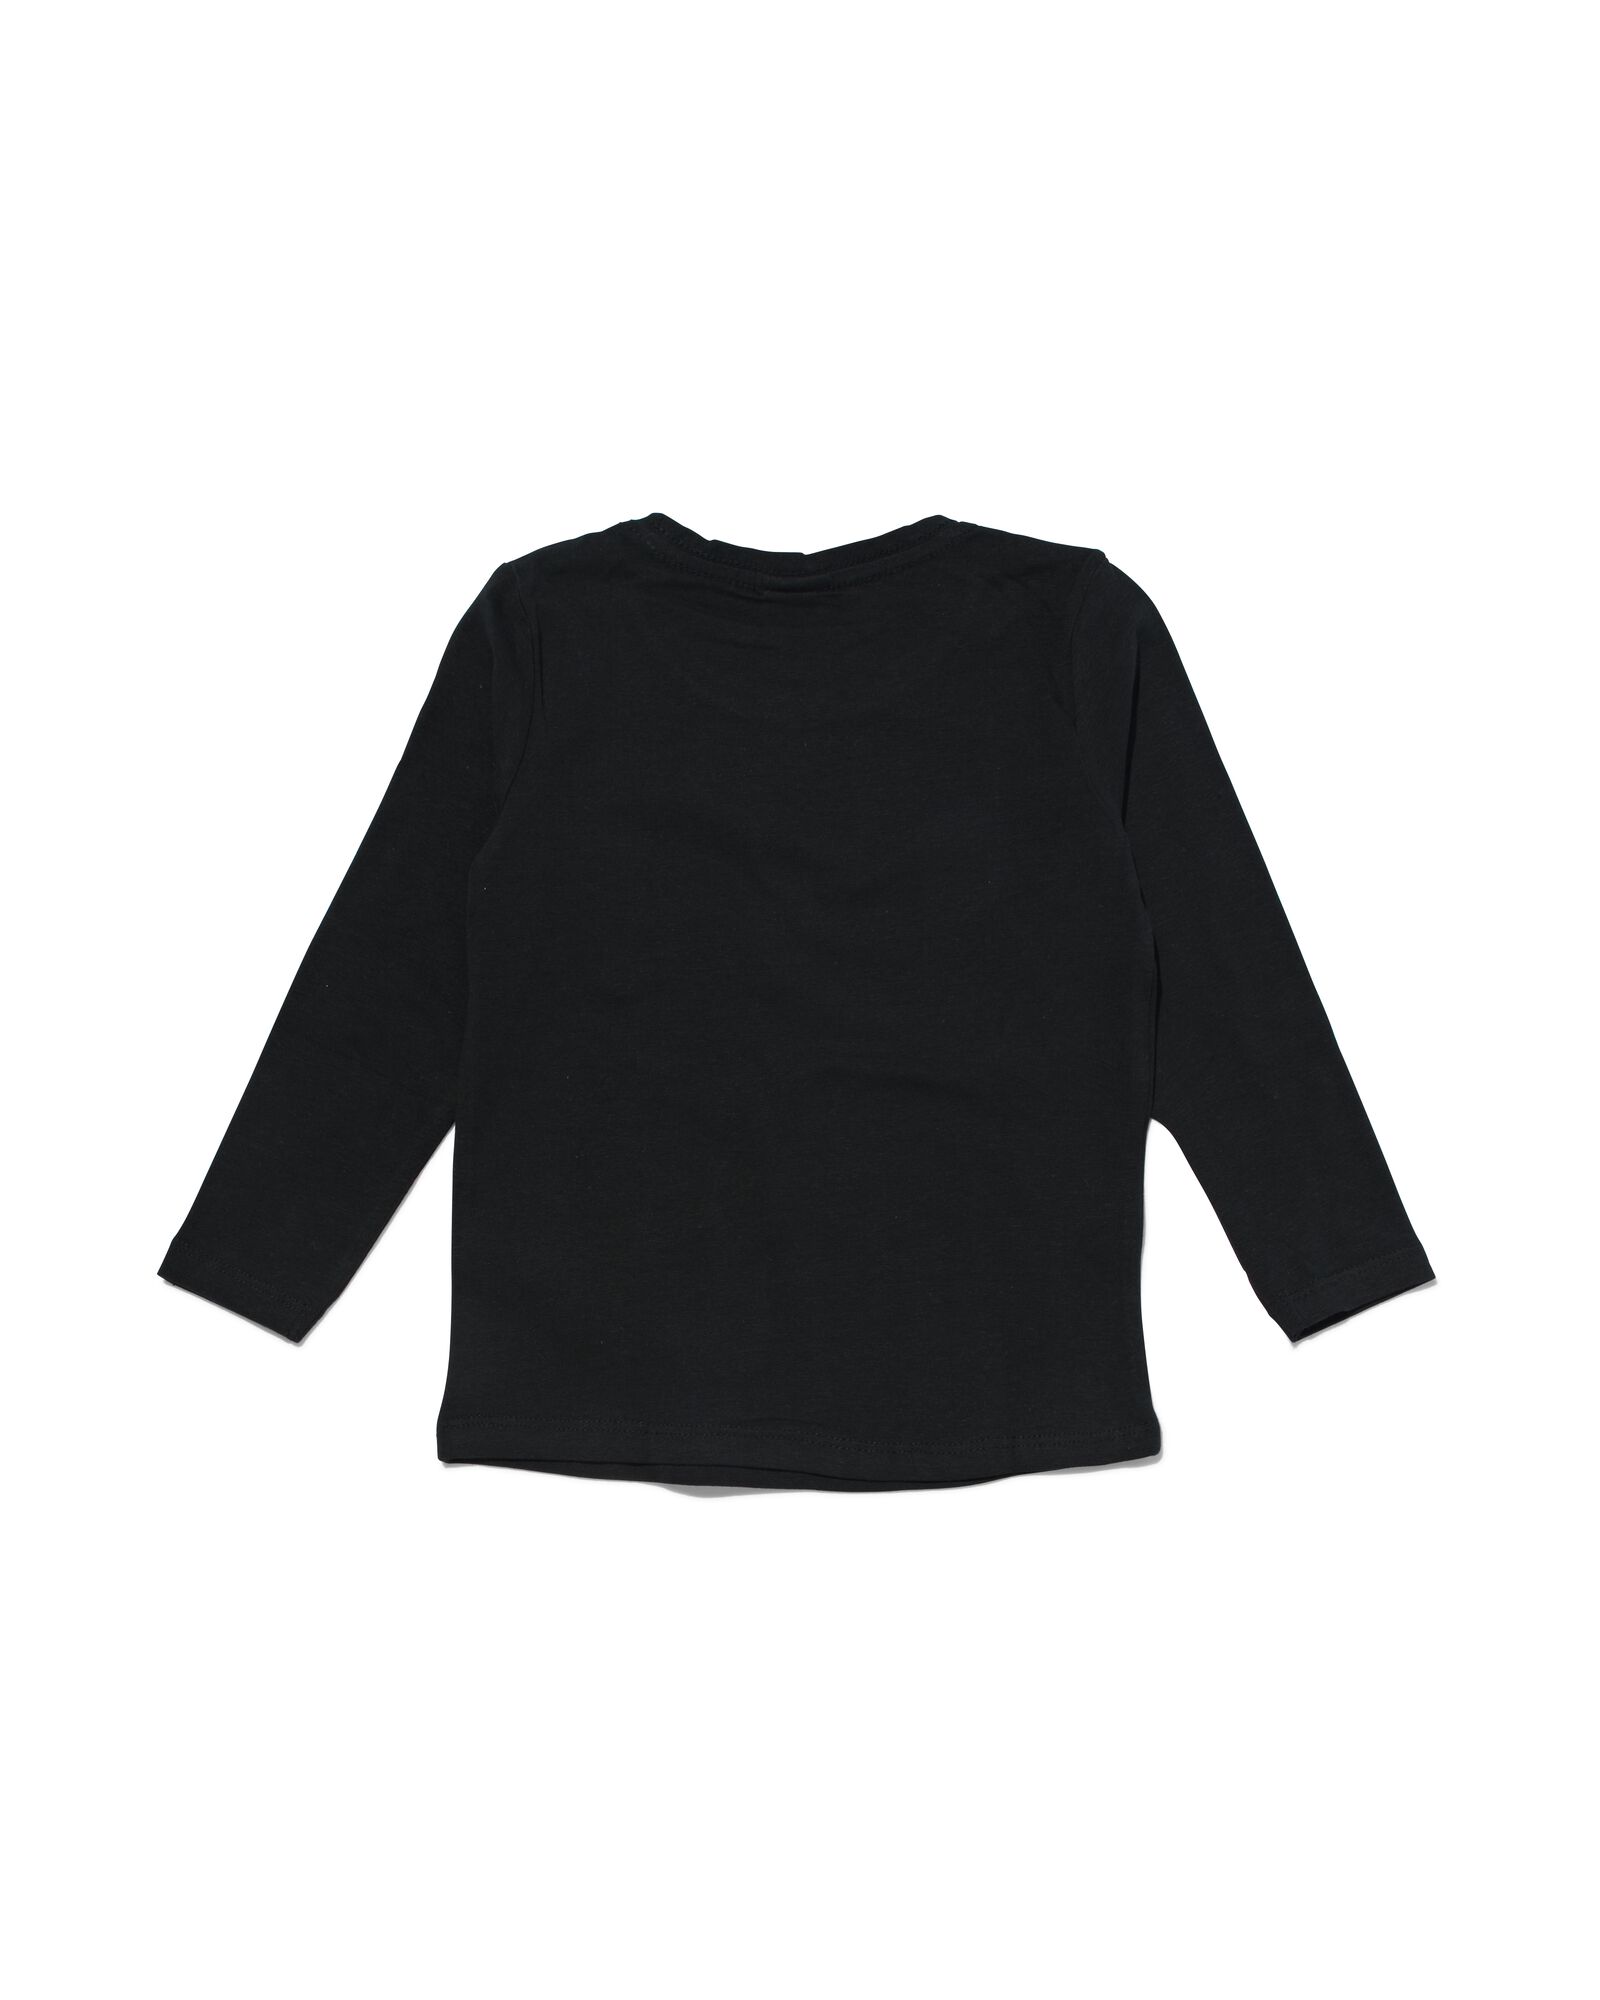 t-shirt enfant noir 122/128 - 30843645 - HEMA